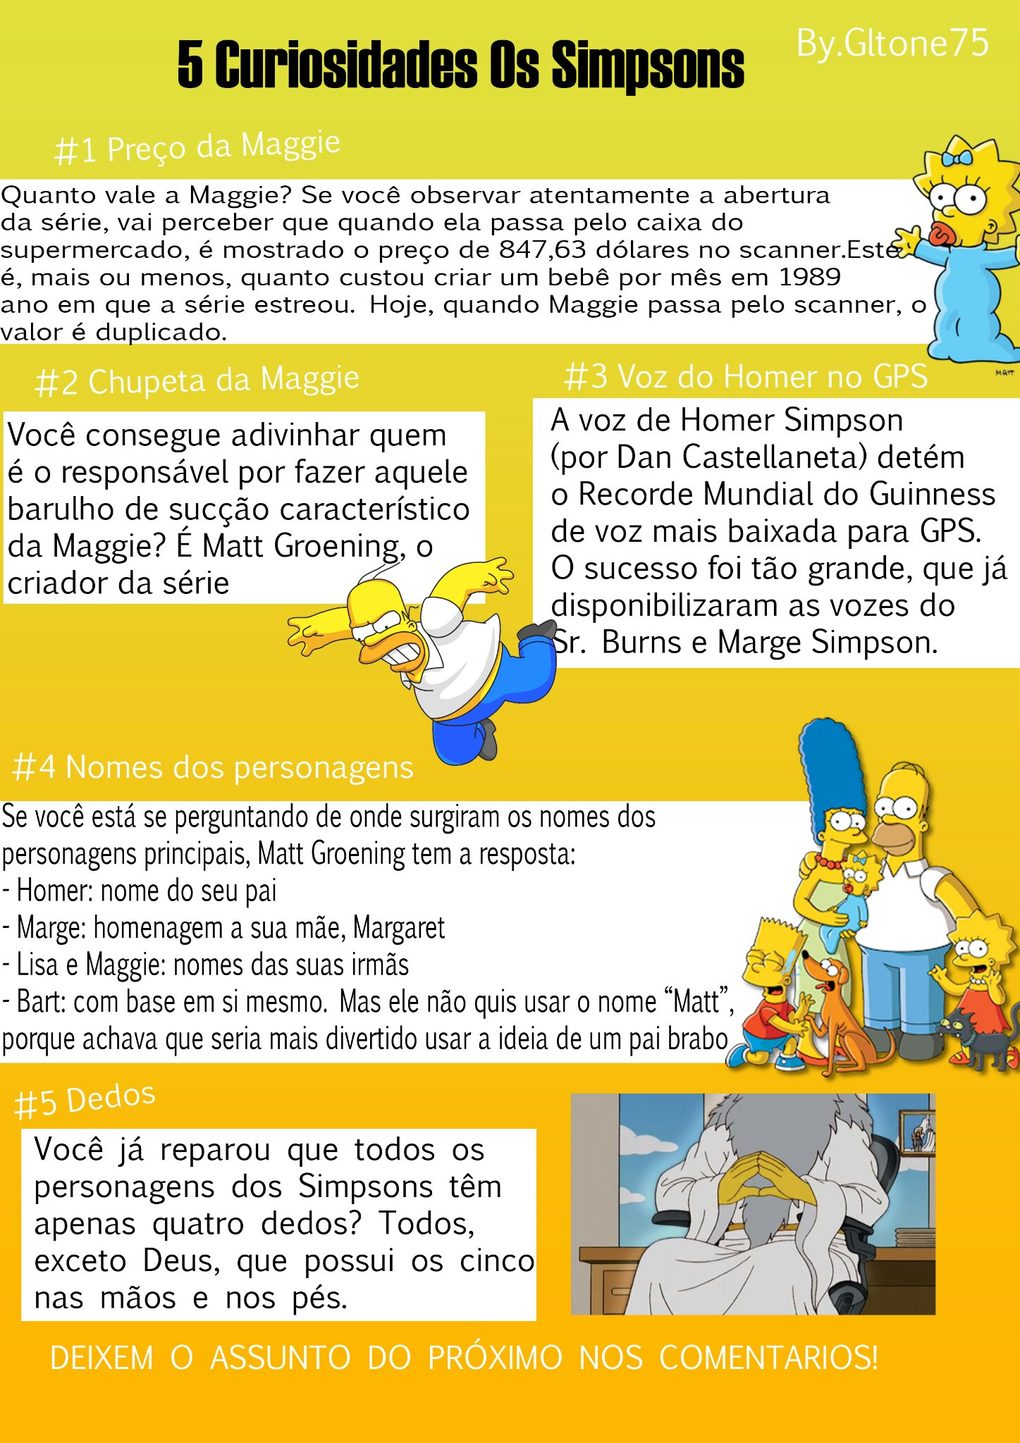 5 curiosidades Os Simpsons - meme